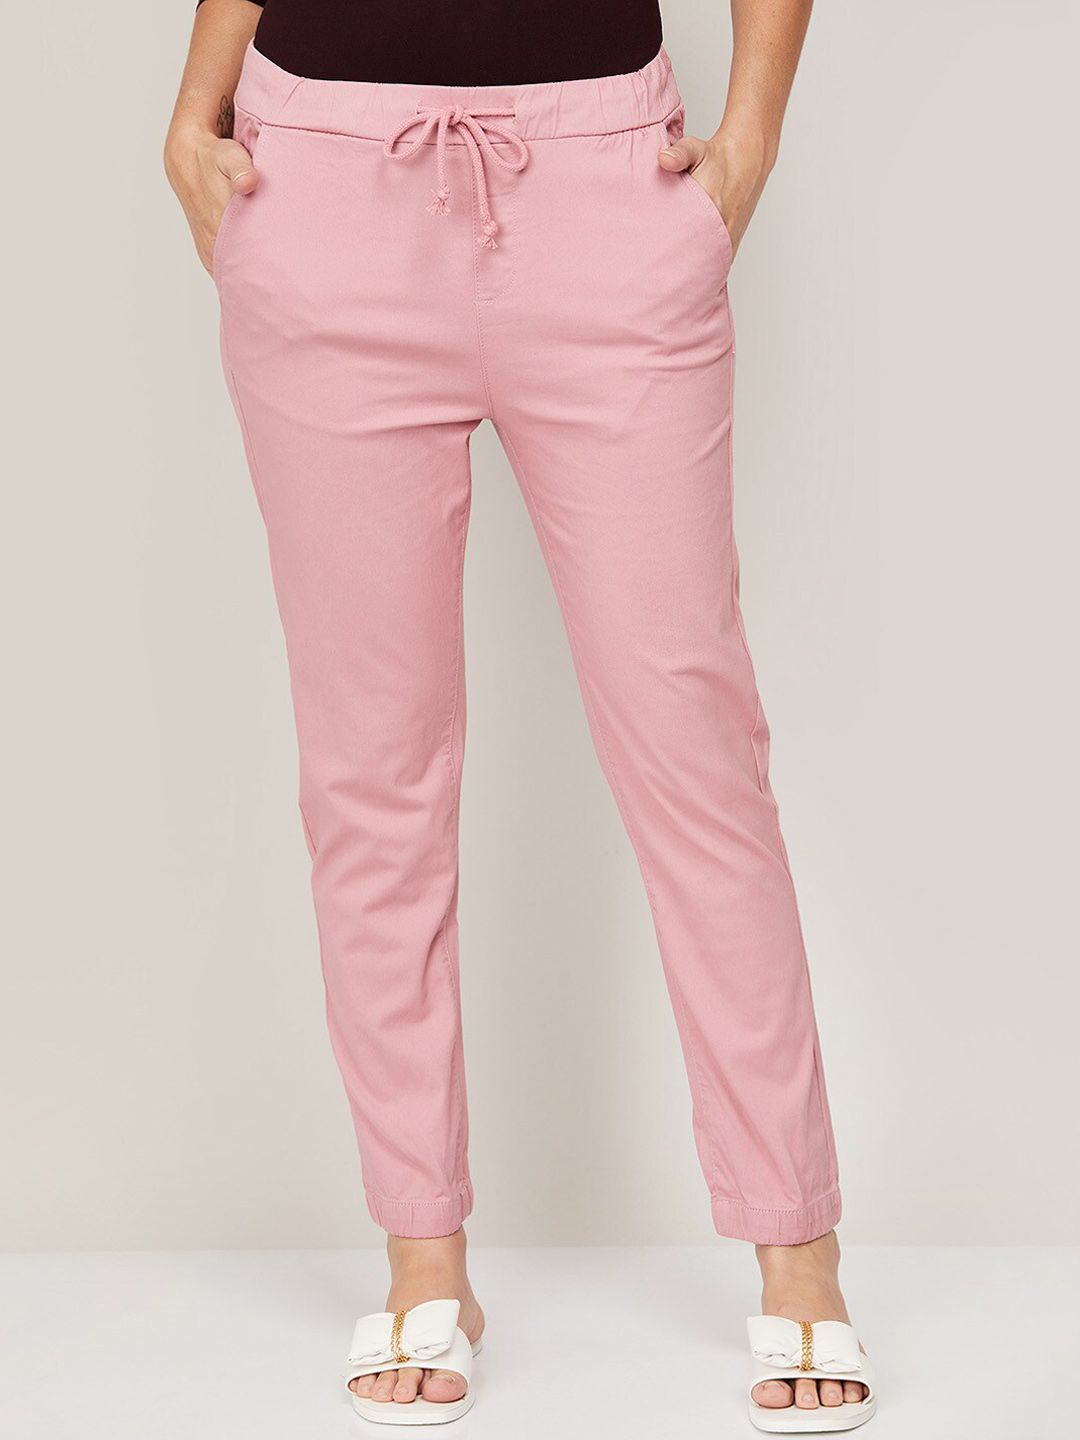 Bossini Women Pink Trousers Price in India